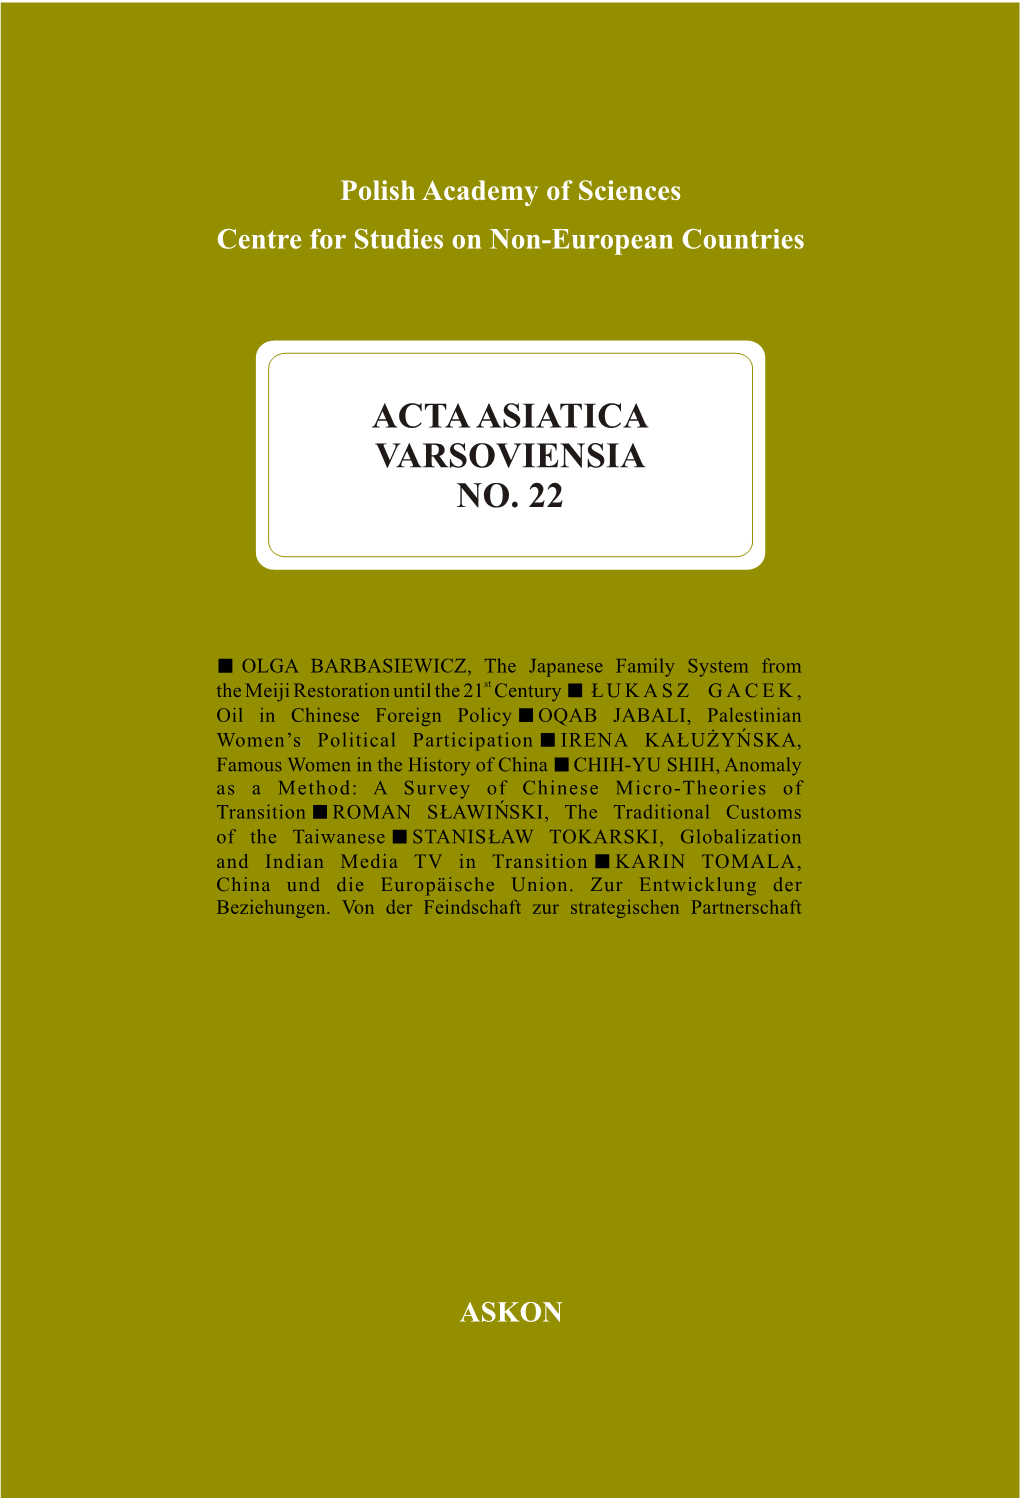 Acta Asiatica Varsoviensia No. 22